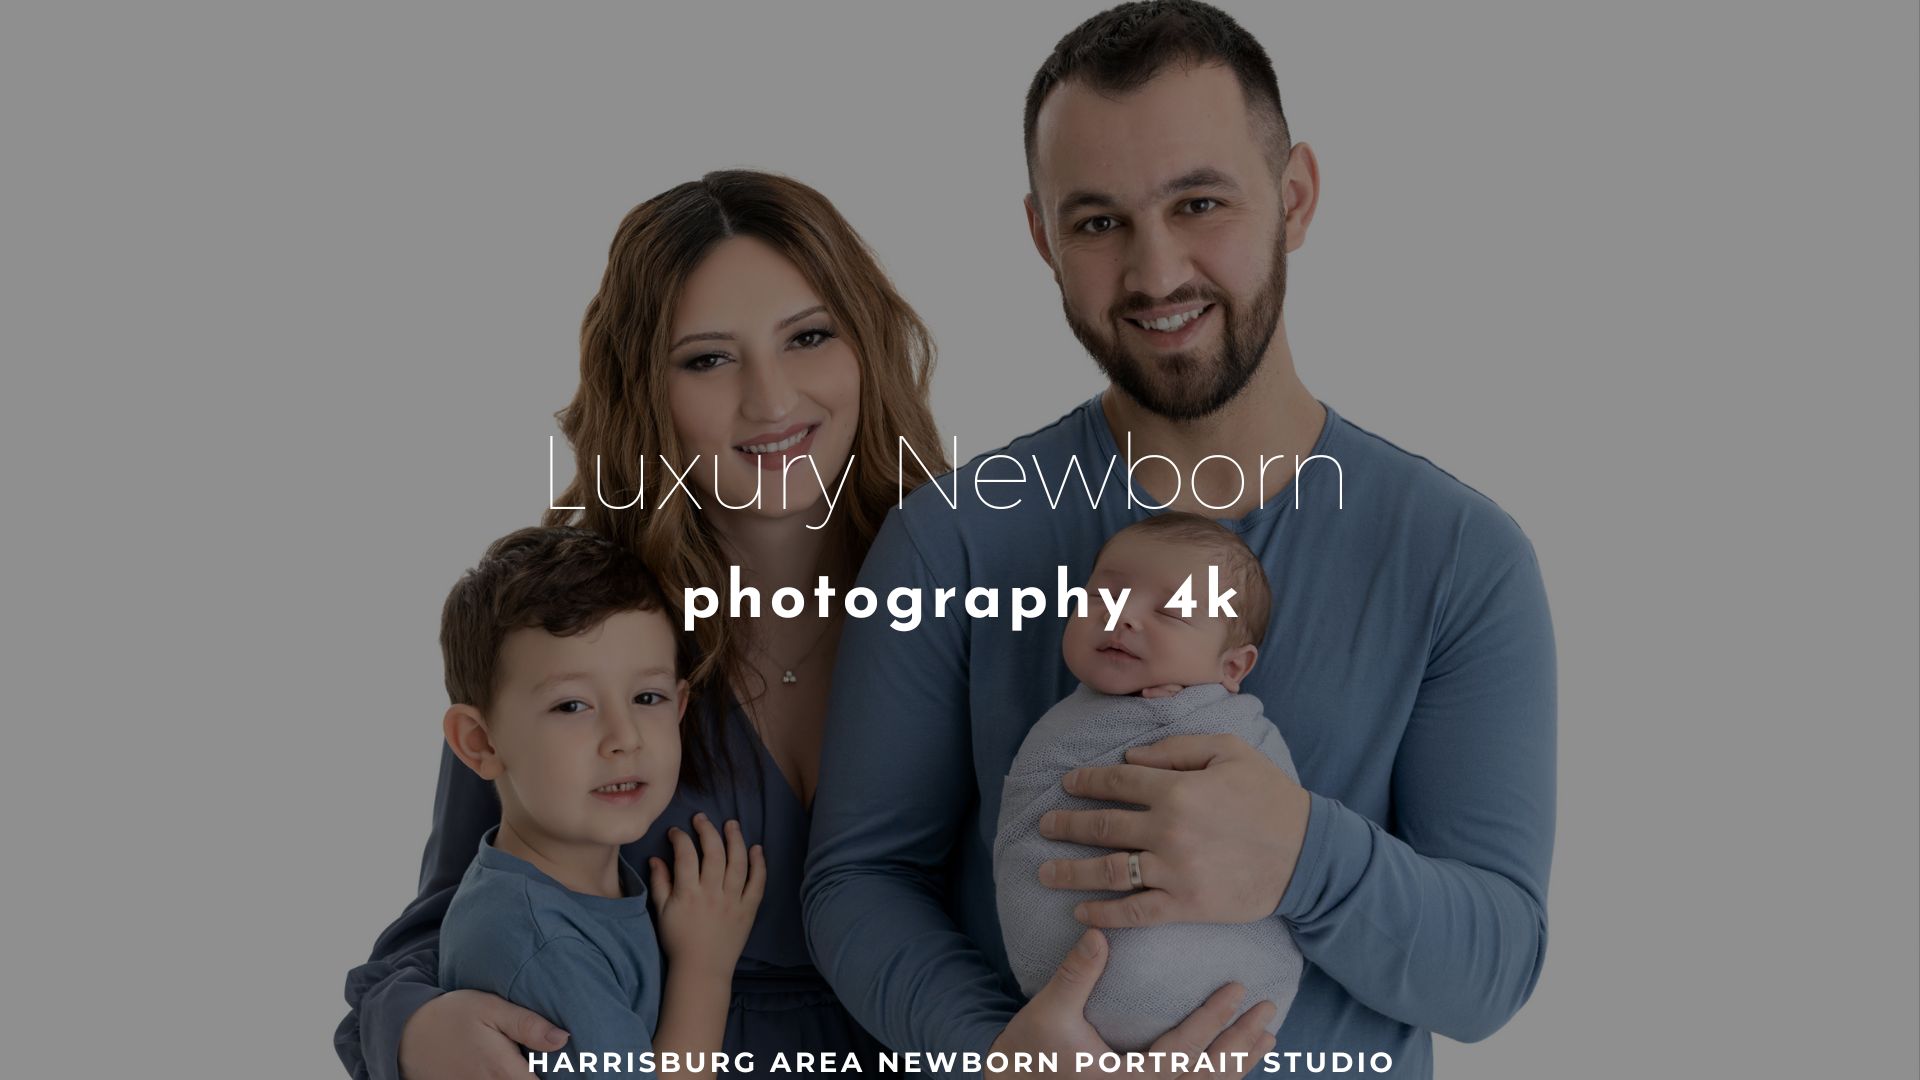 luxury newborn photography 4k featured blog